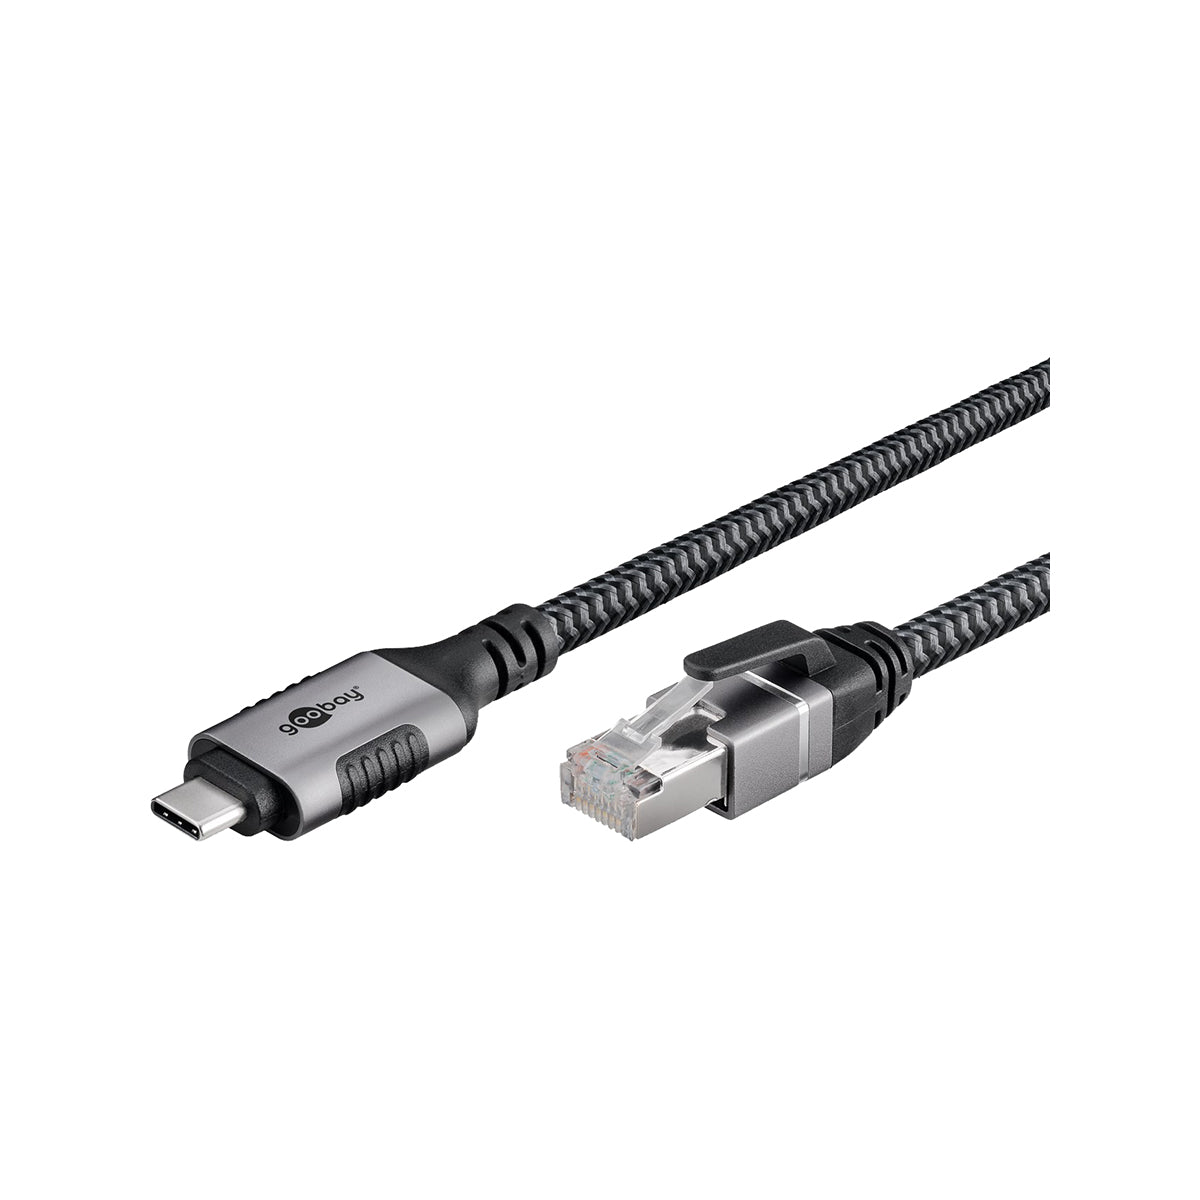 GooBay USB-C™ 3.1 to RJ45 Ethernet Cable 7.5m for Laptop/Tablet - Black